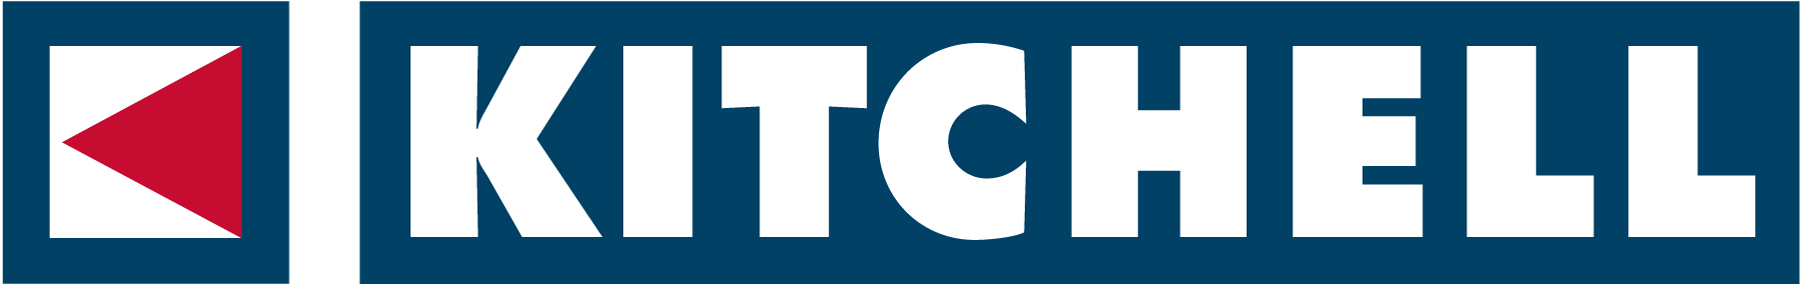 Kitchell Contractors logo.